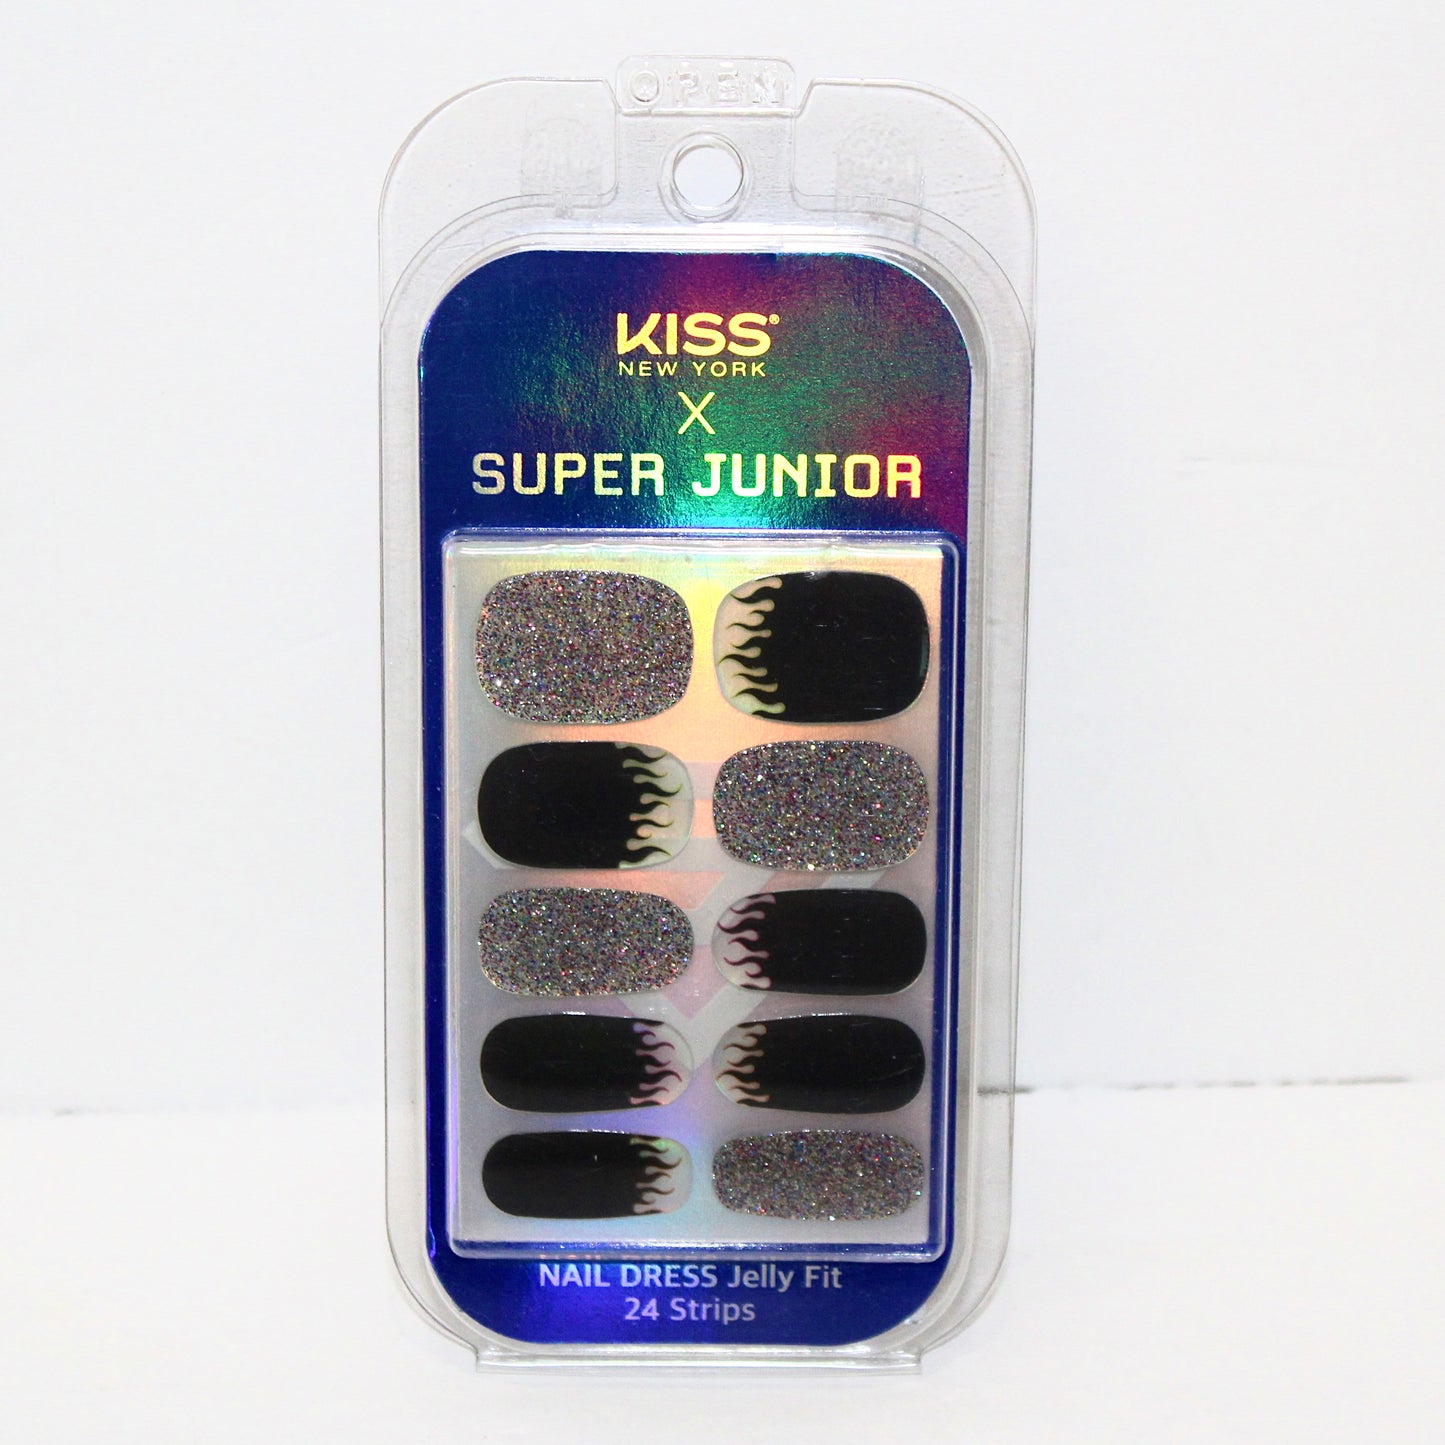 Kiss New York x Super Junior 15th Anniversary Collab Jelly Fit Nails